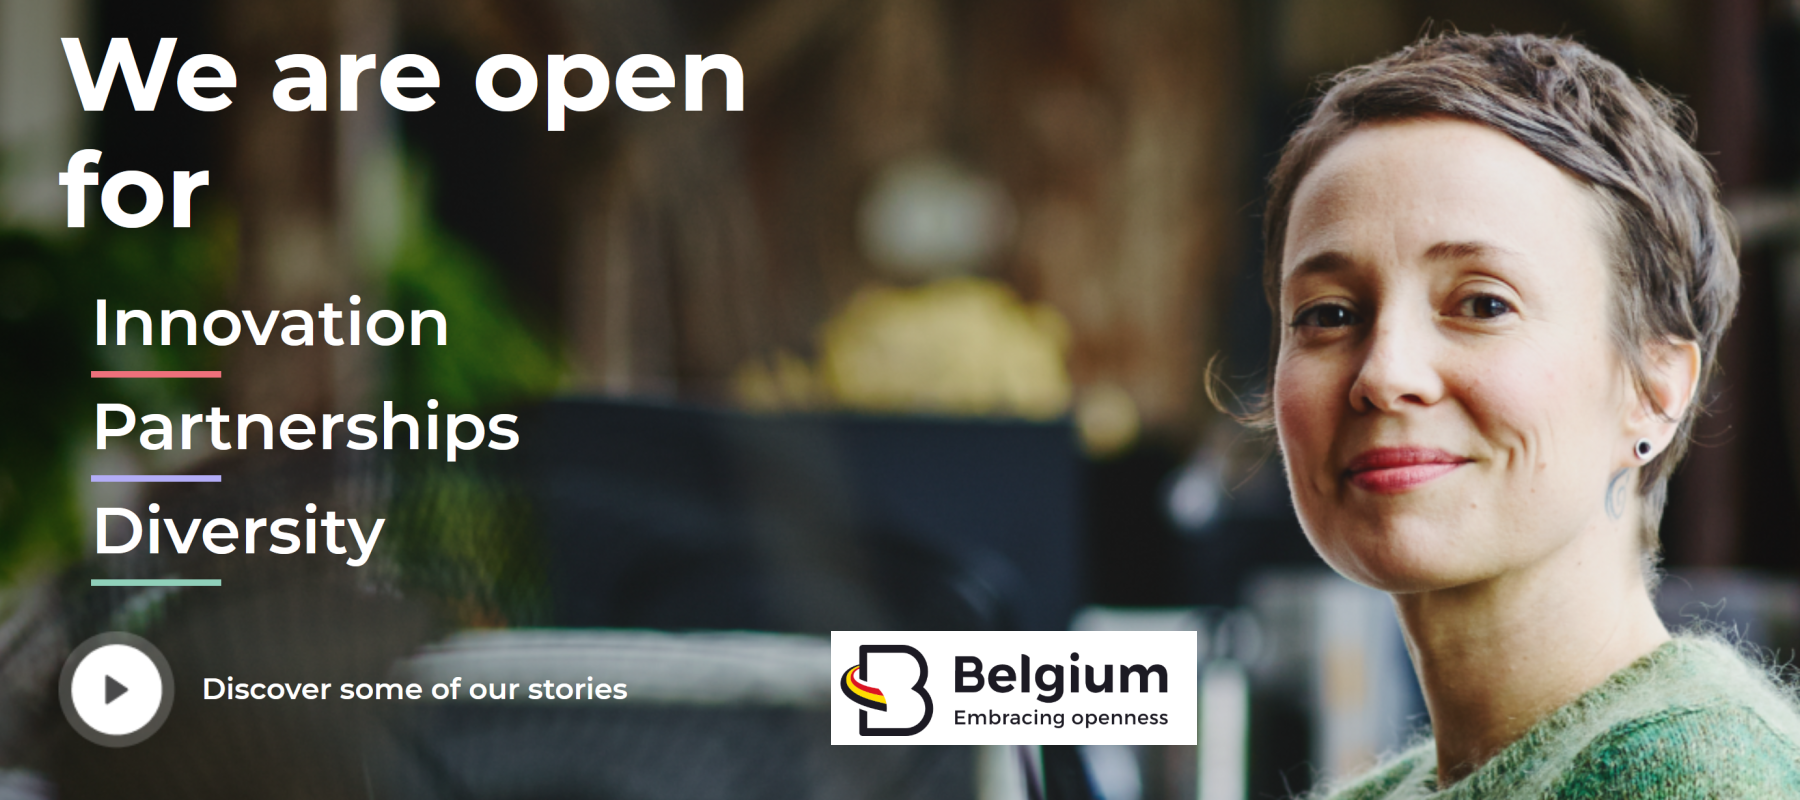 België met internationale brandingcampagne Embracing Openess